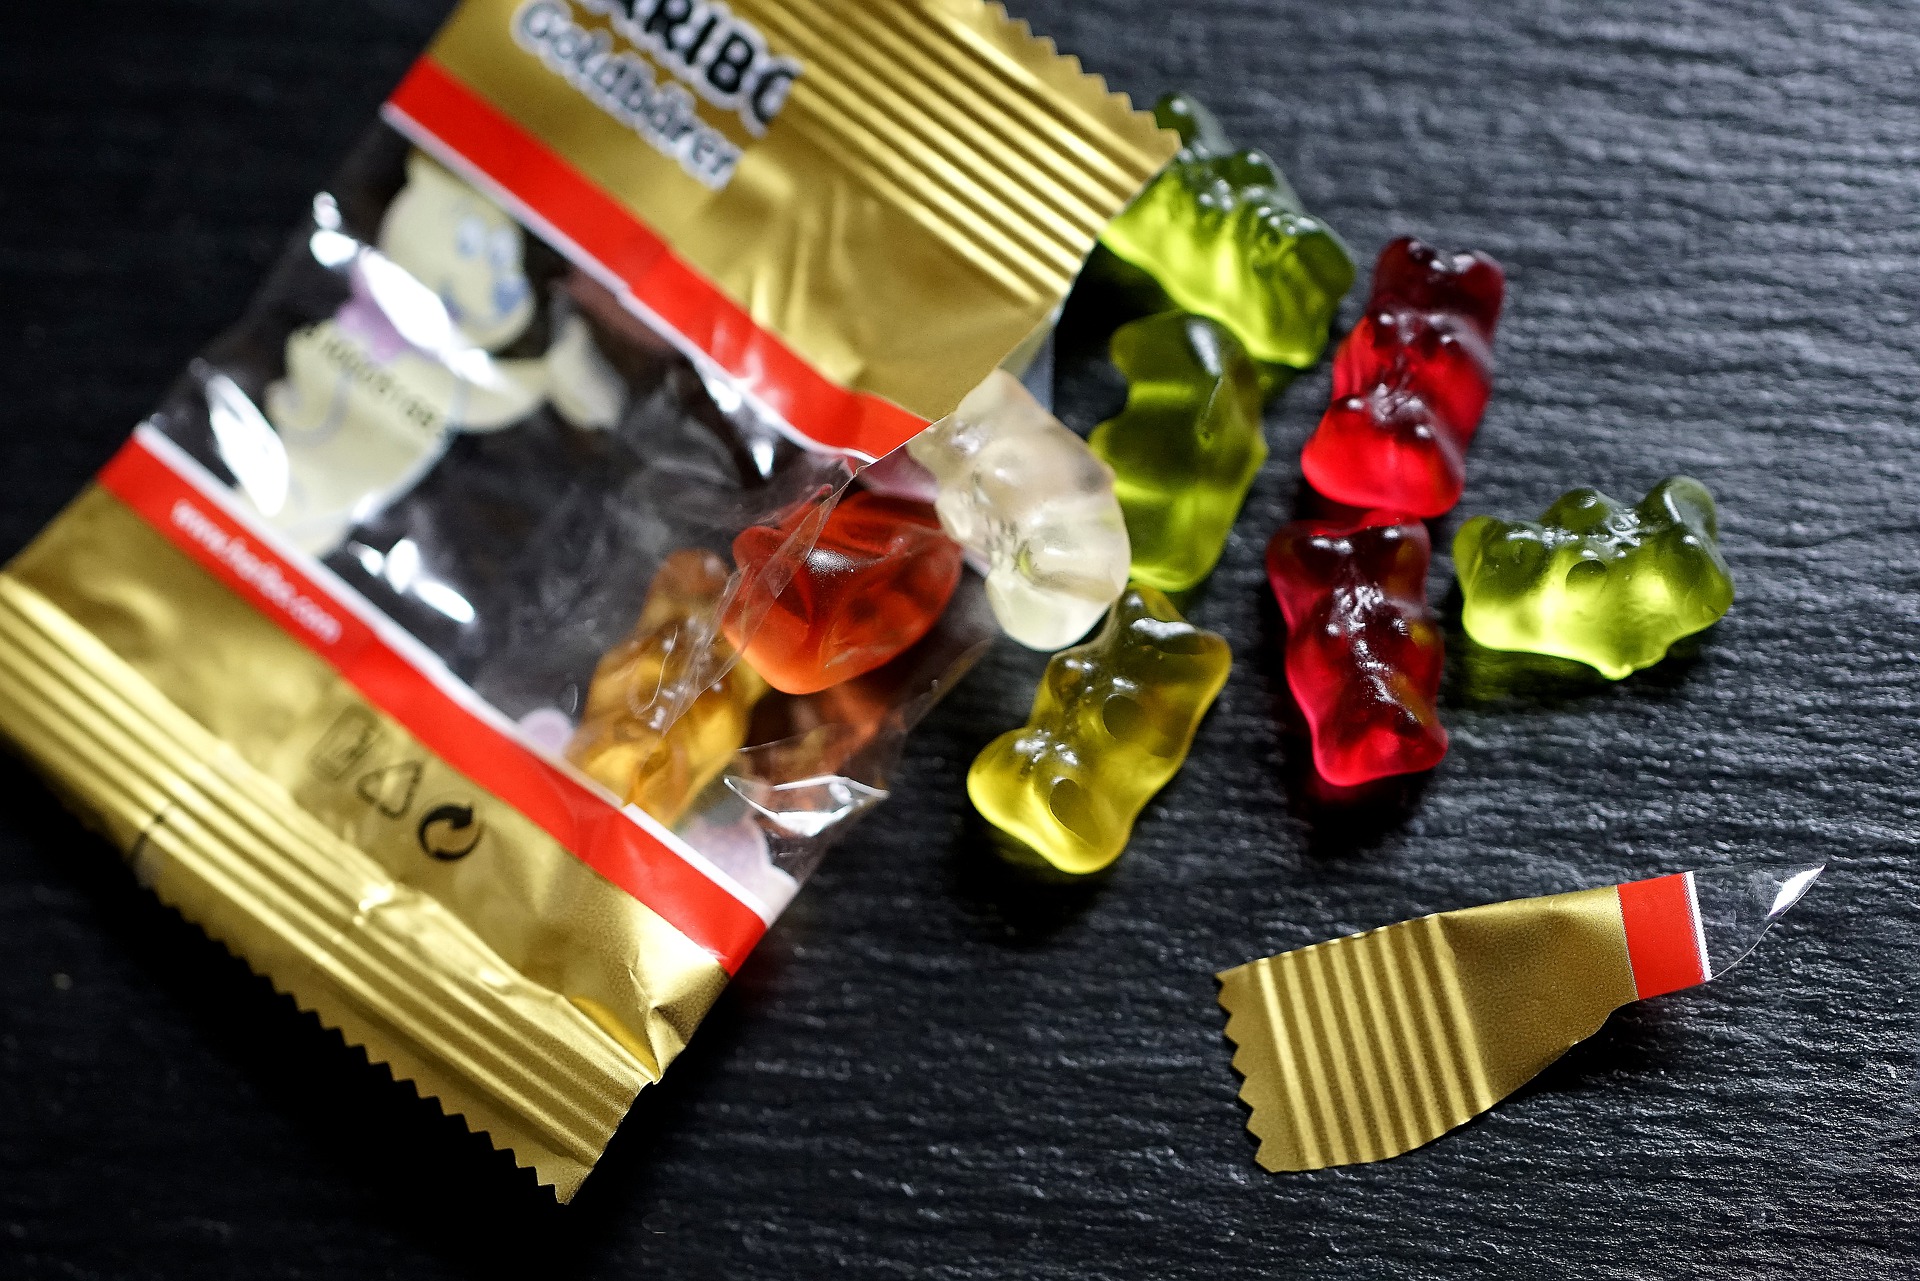 Haribo Sugar Free Gummy Bears Reviews Before Buying